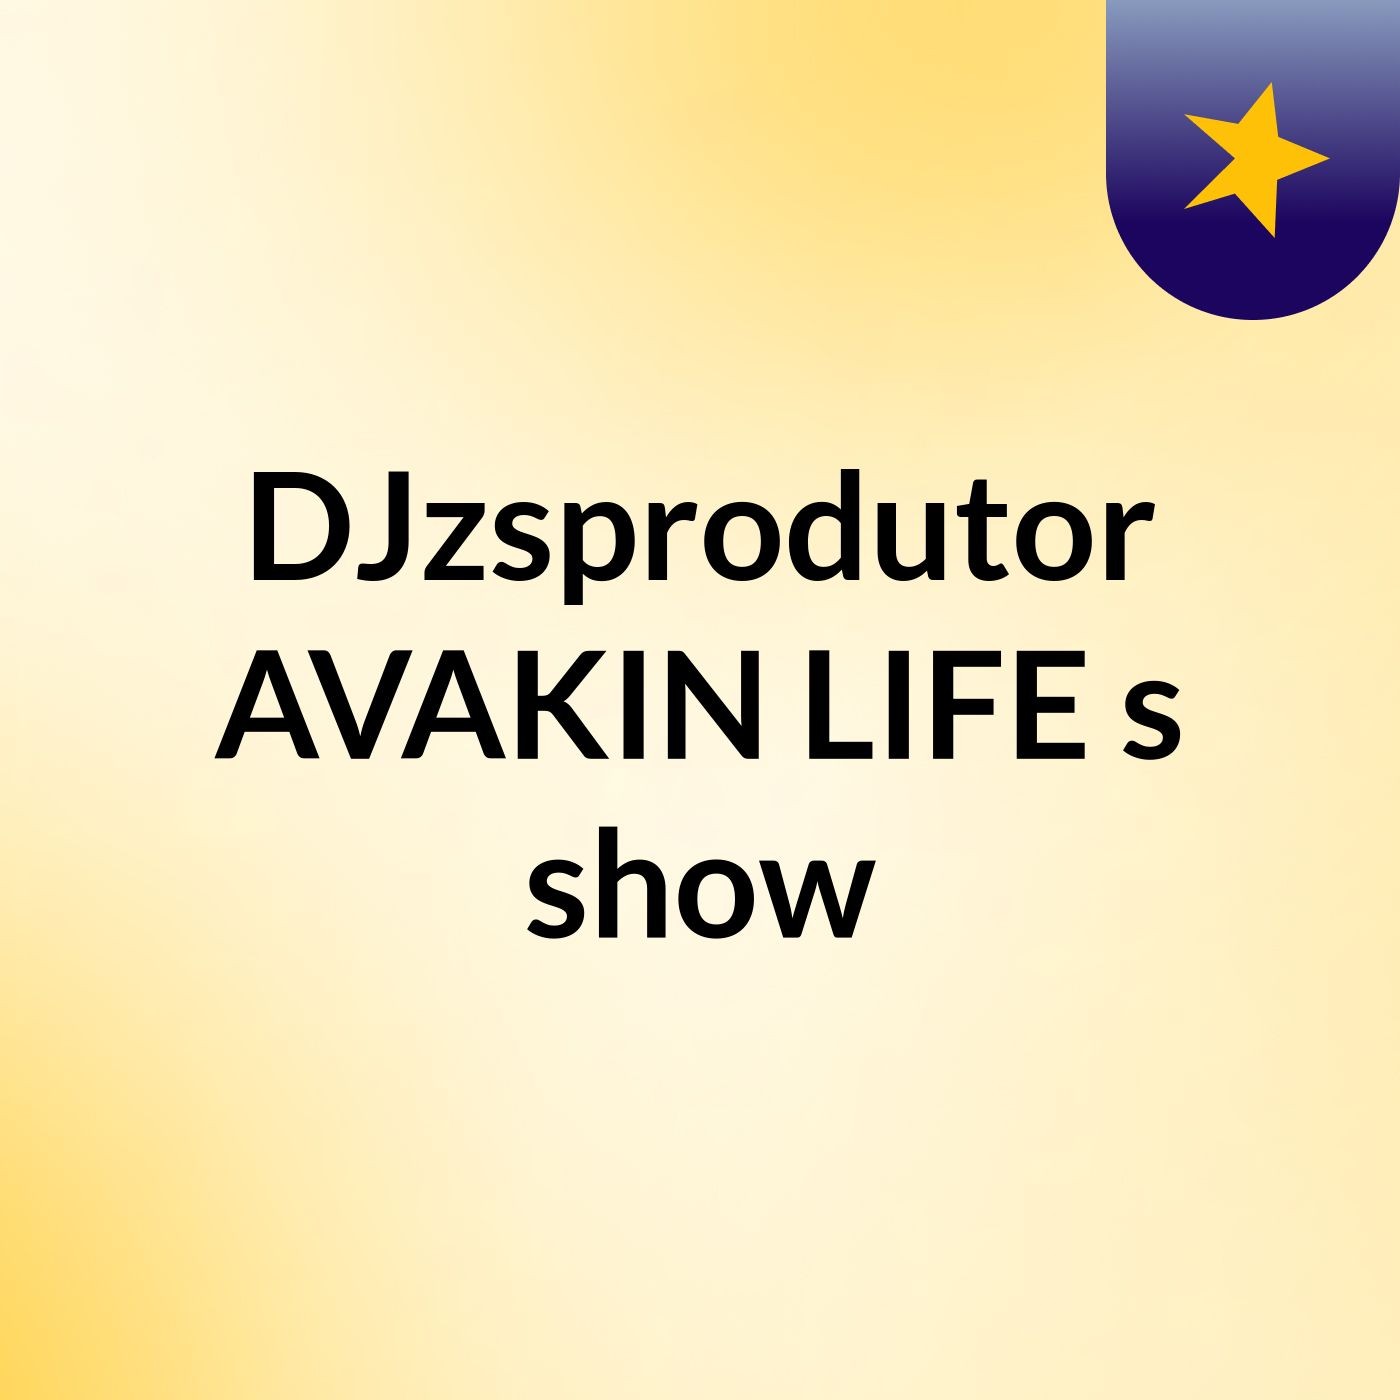 DJzsprodutor AVAKIN LIFE's show